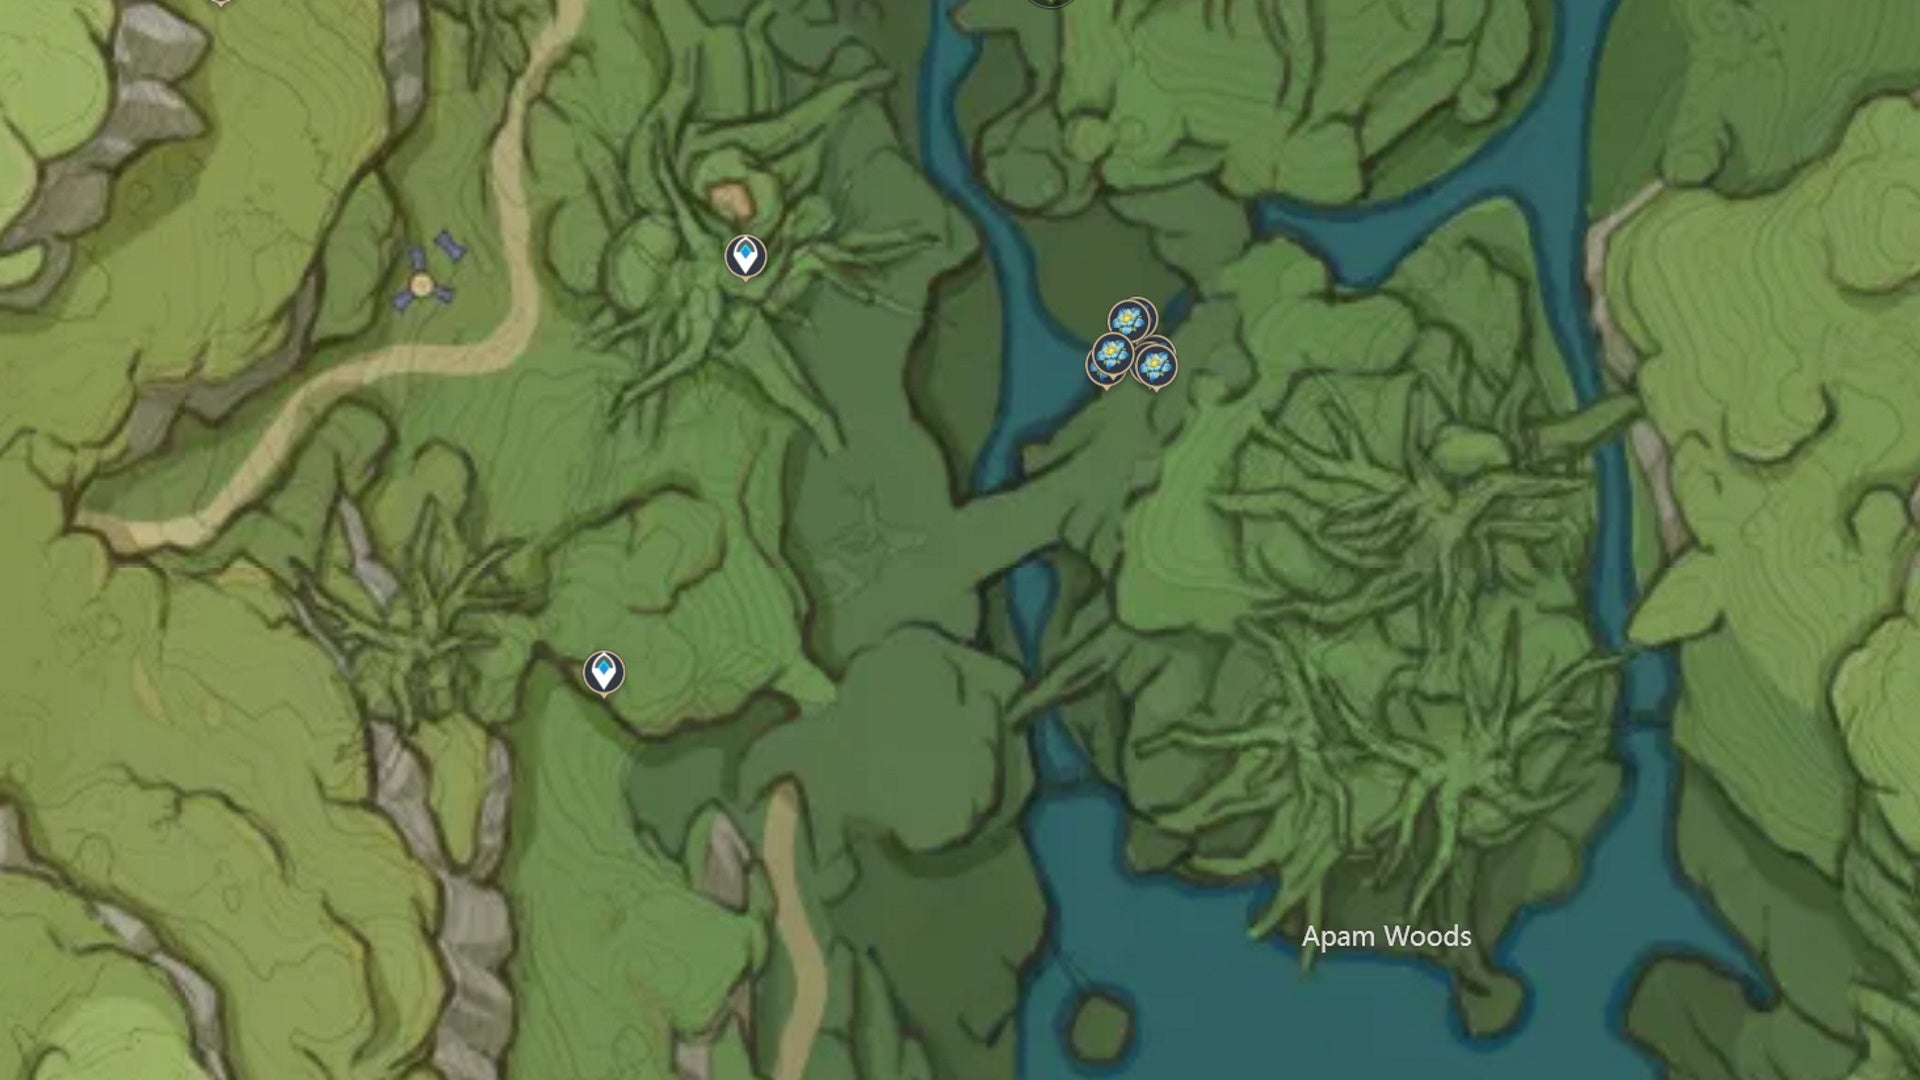 Genshin Impact Kalpalata Lotus locations: A map showing Kalpalata locations Apam Woods